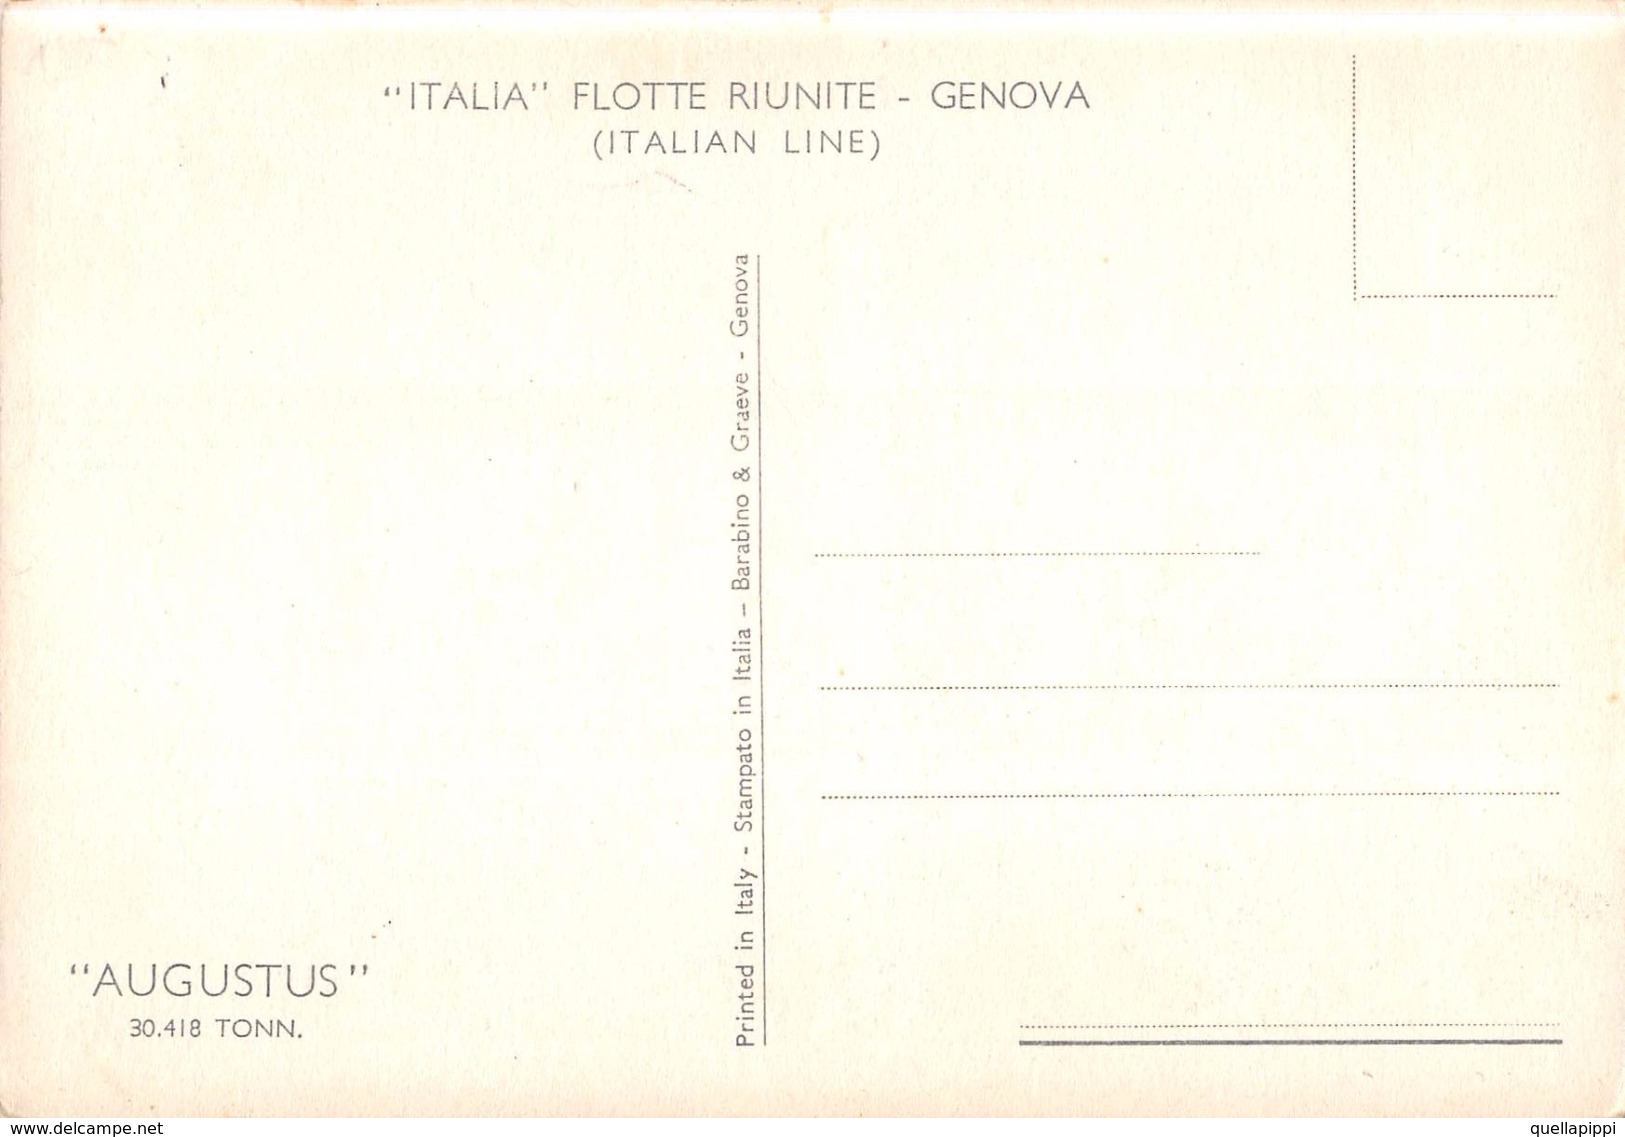 05422 "MOTONAVE AUGUSTUS 30418 TONN - ITALIA FLOTTE RIUNITE - GENOVA"  CART NON SPED - Banks